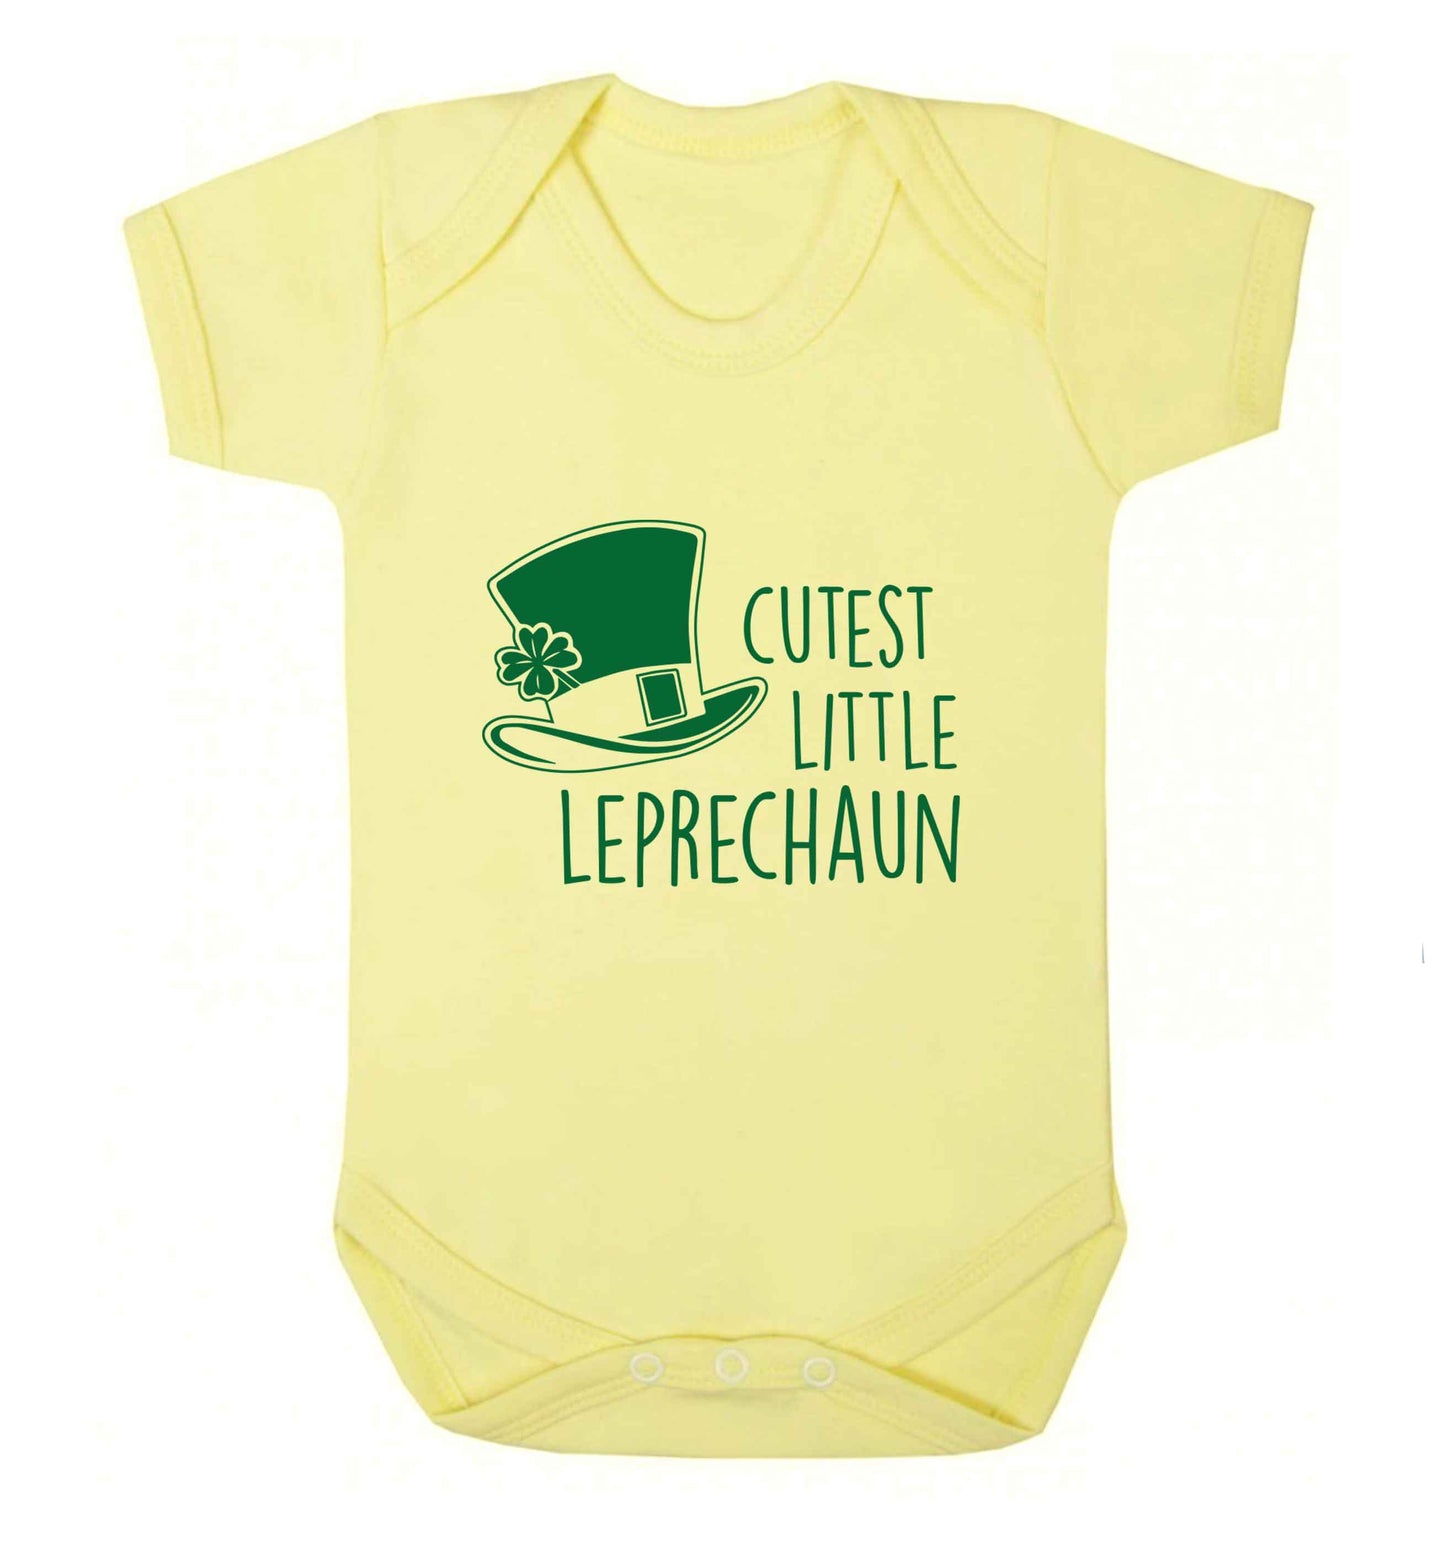 Cutest little leprechaun baby vest pale yellow 18-24 months